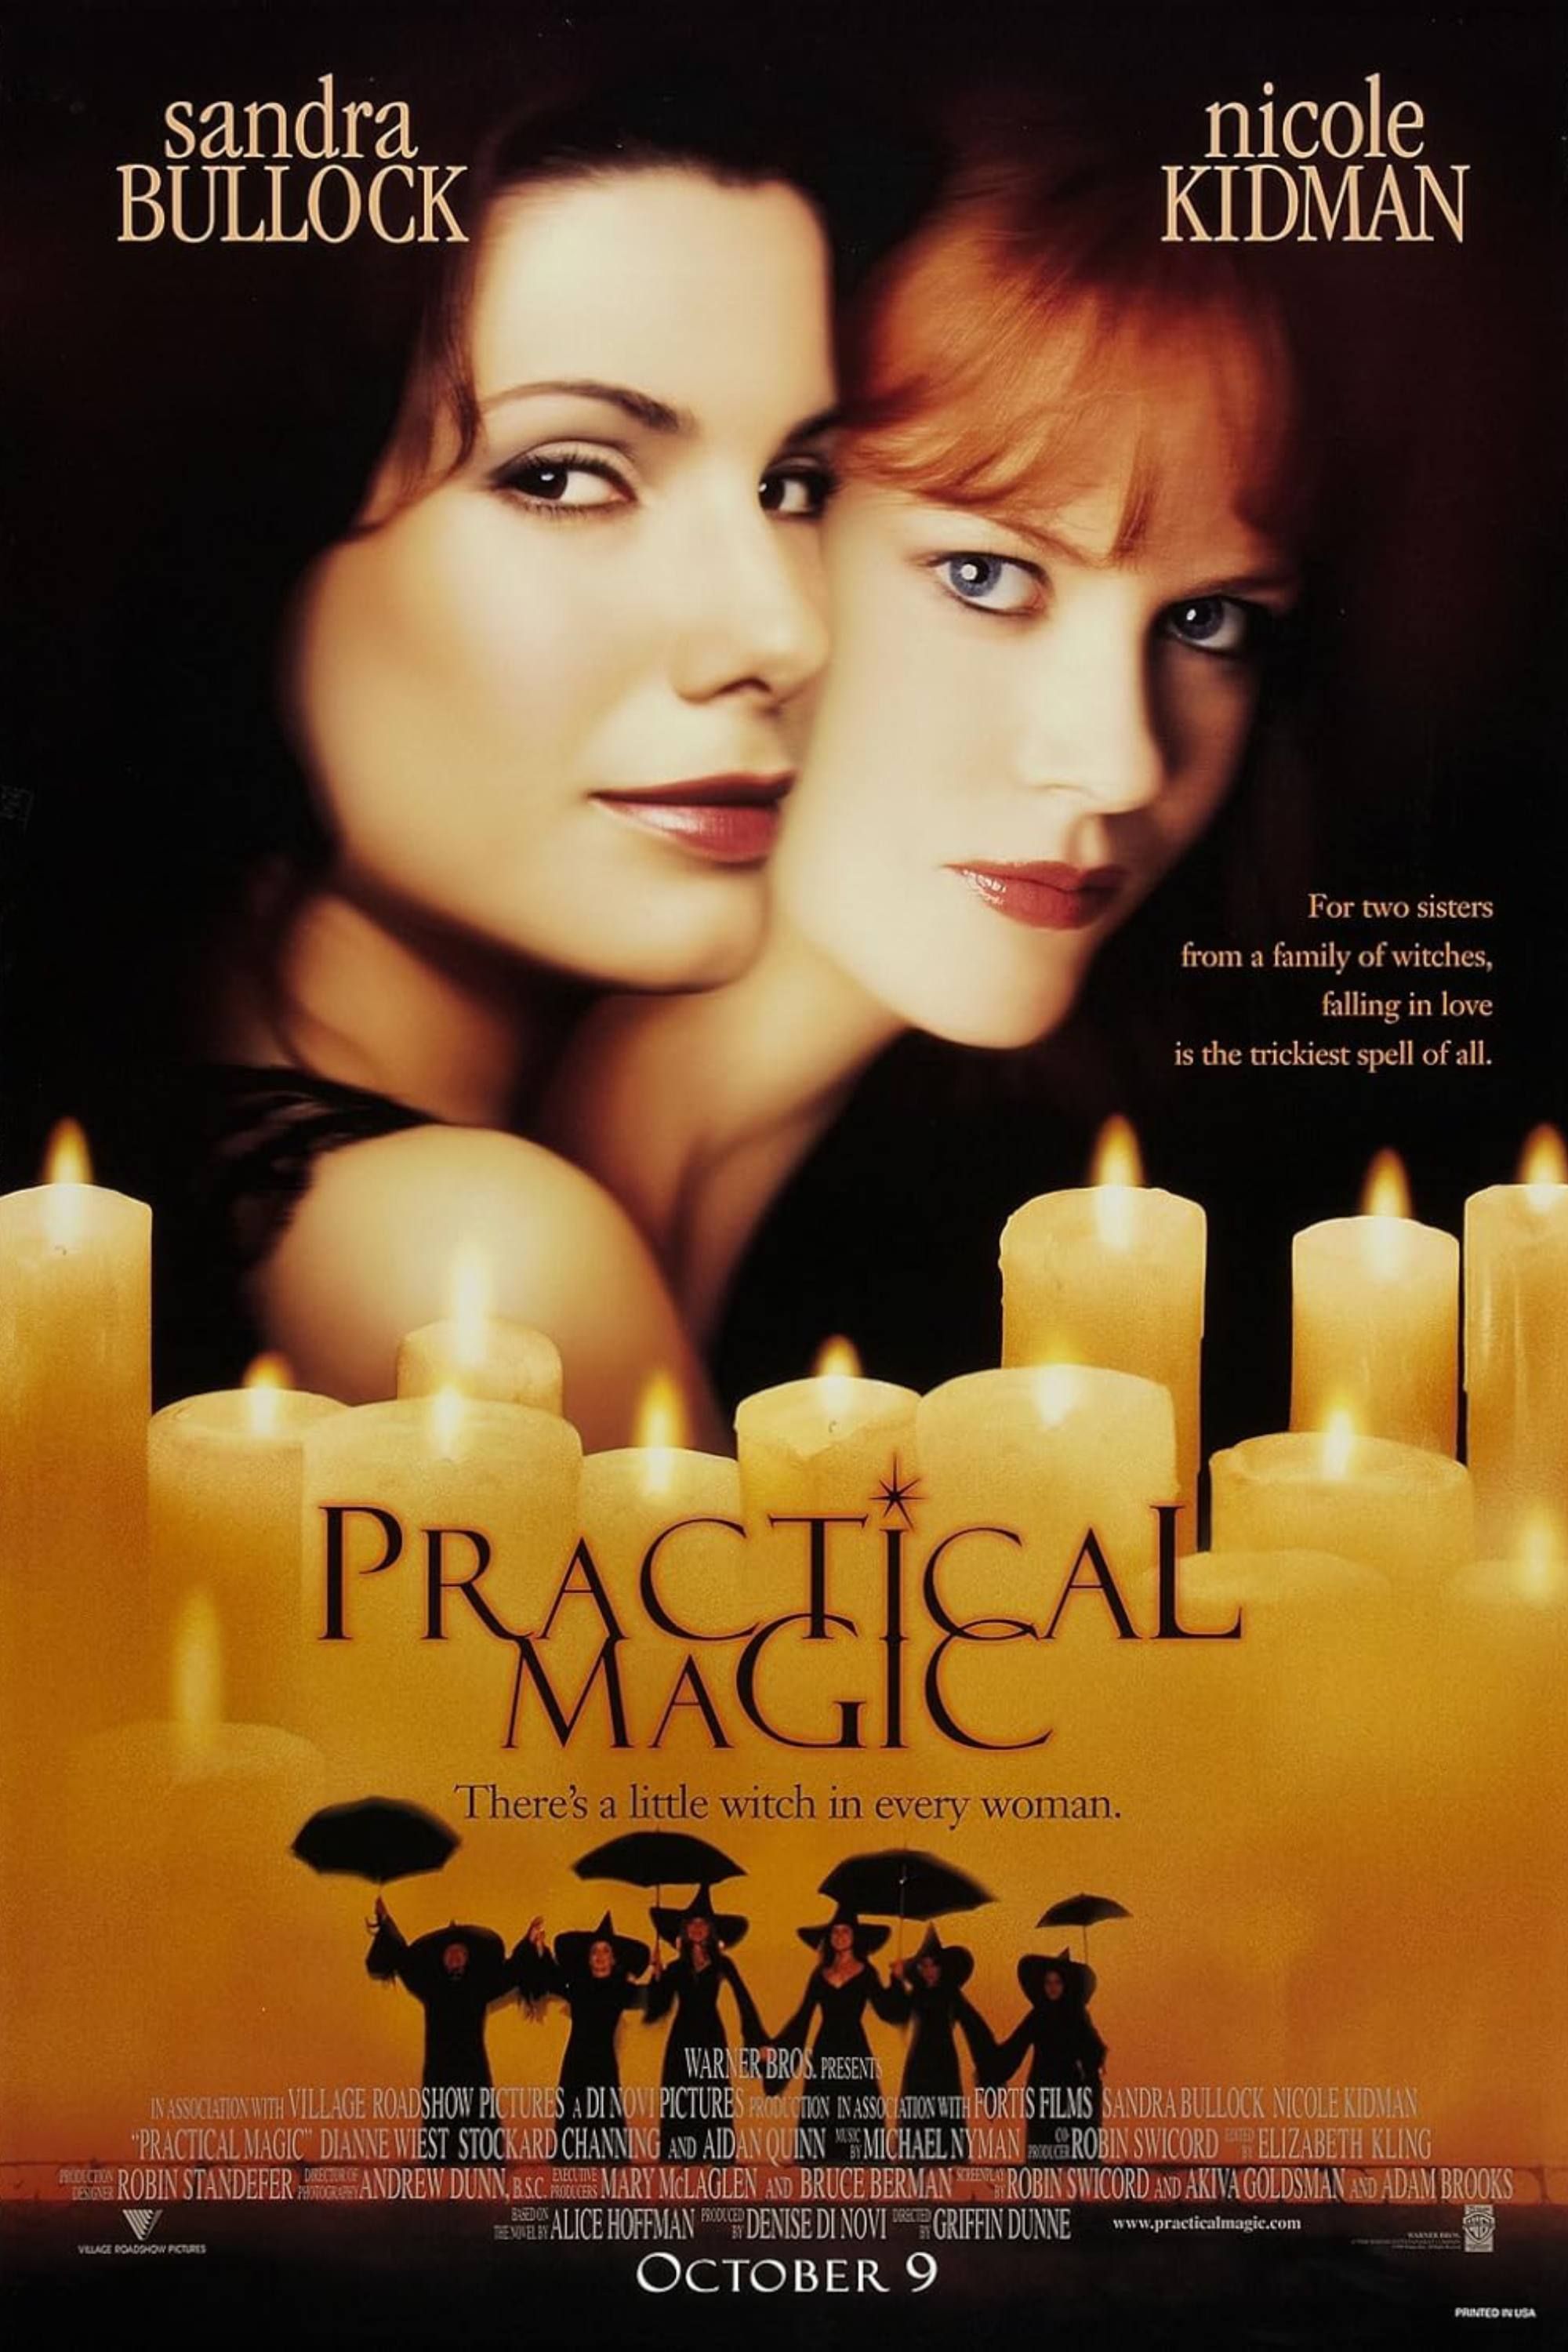 Practical Magic - Poster - Sandra Bullocak and nicole kidman